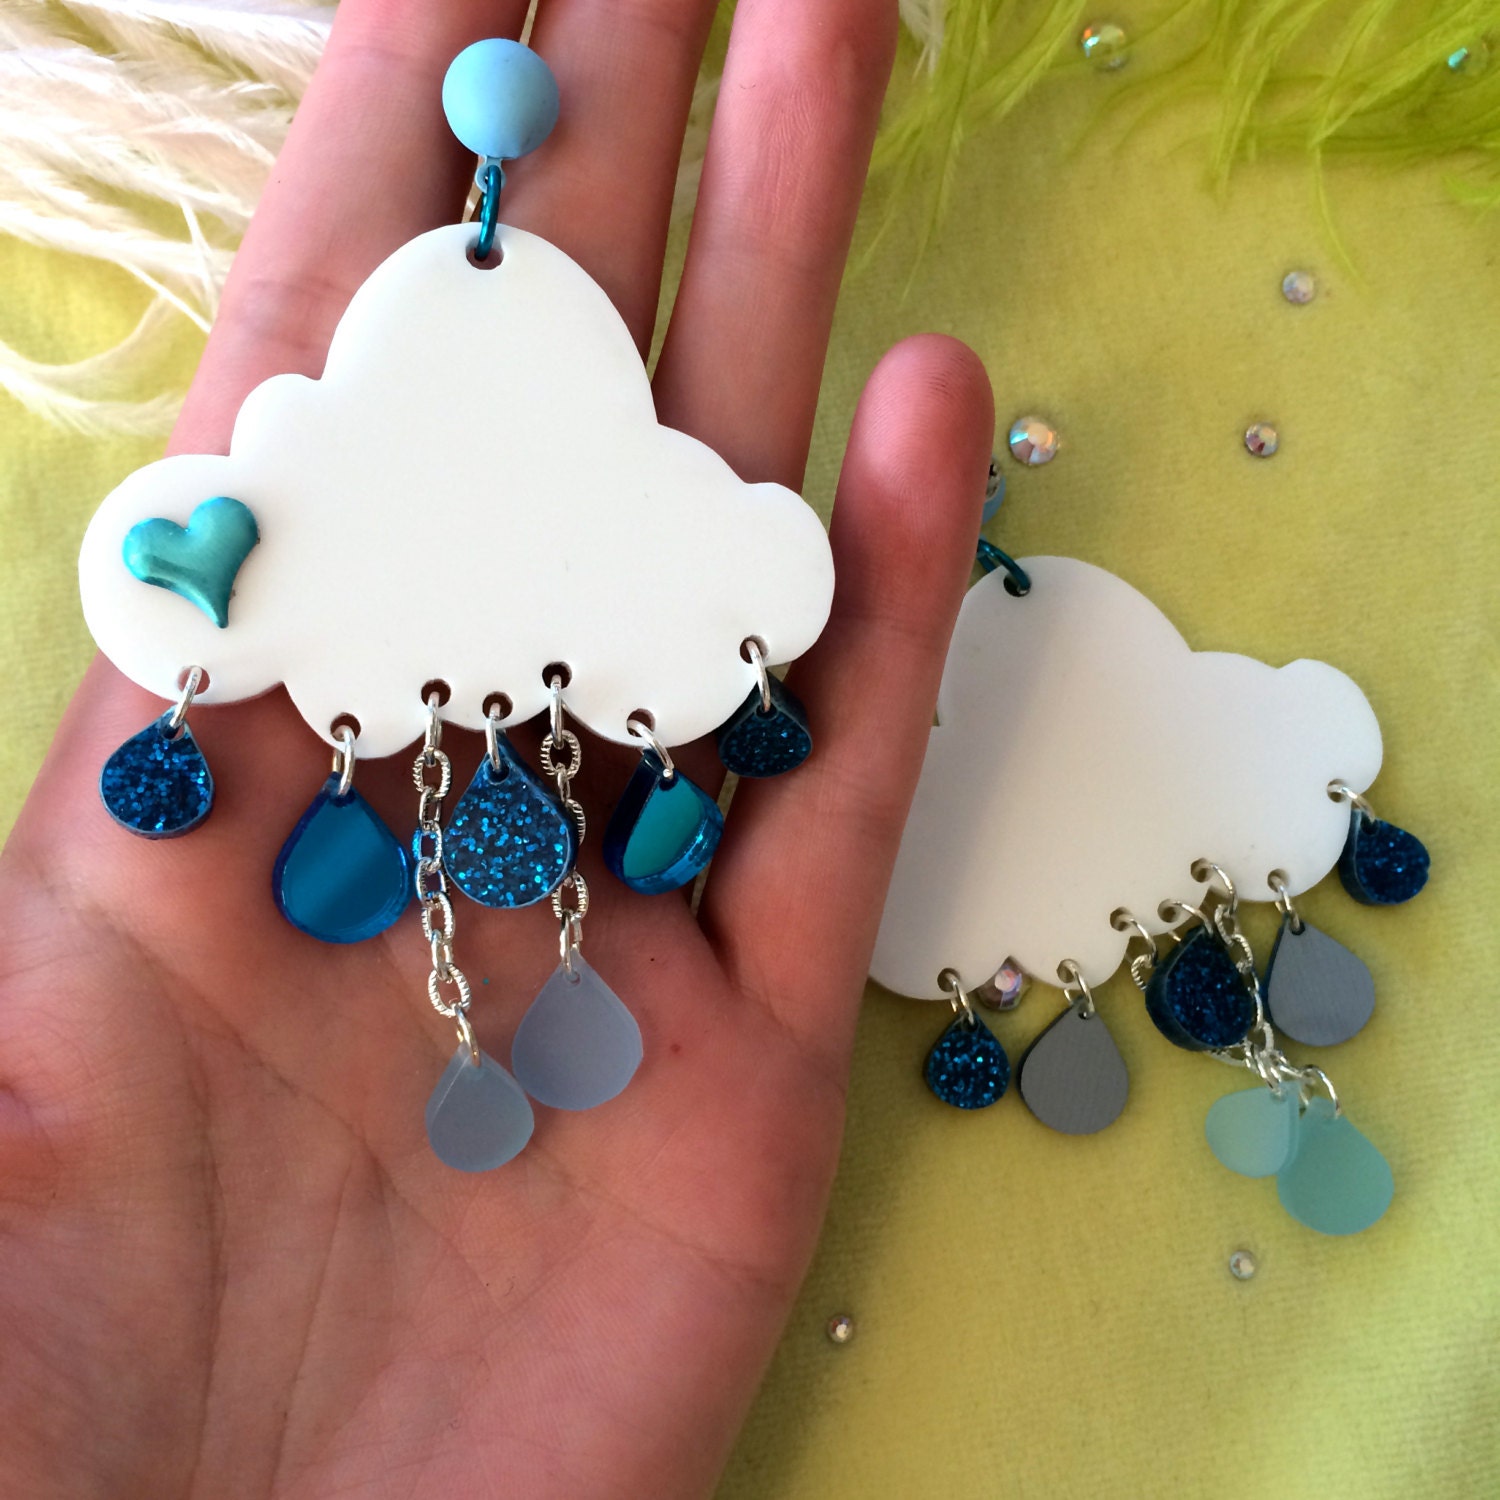 Accessories Jewelry Diy Clouds, Acrylic Bracelet Earrings